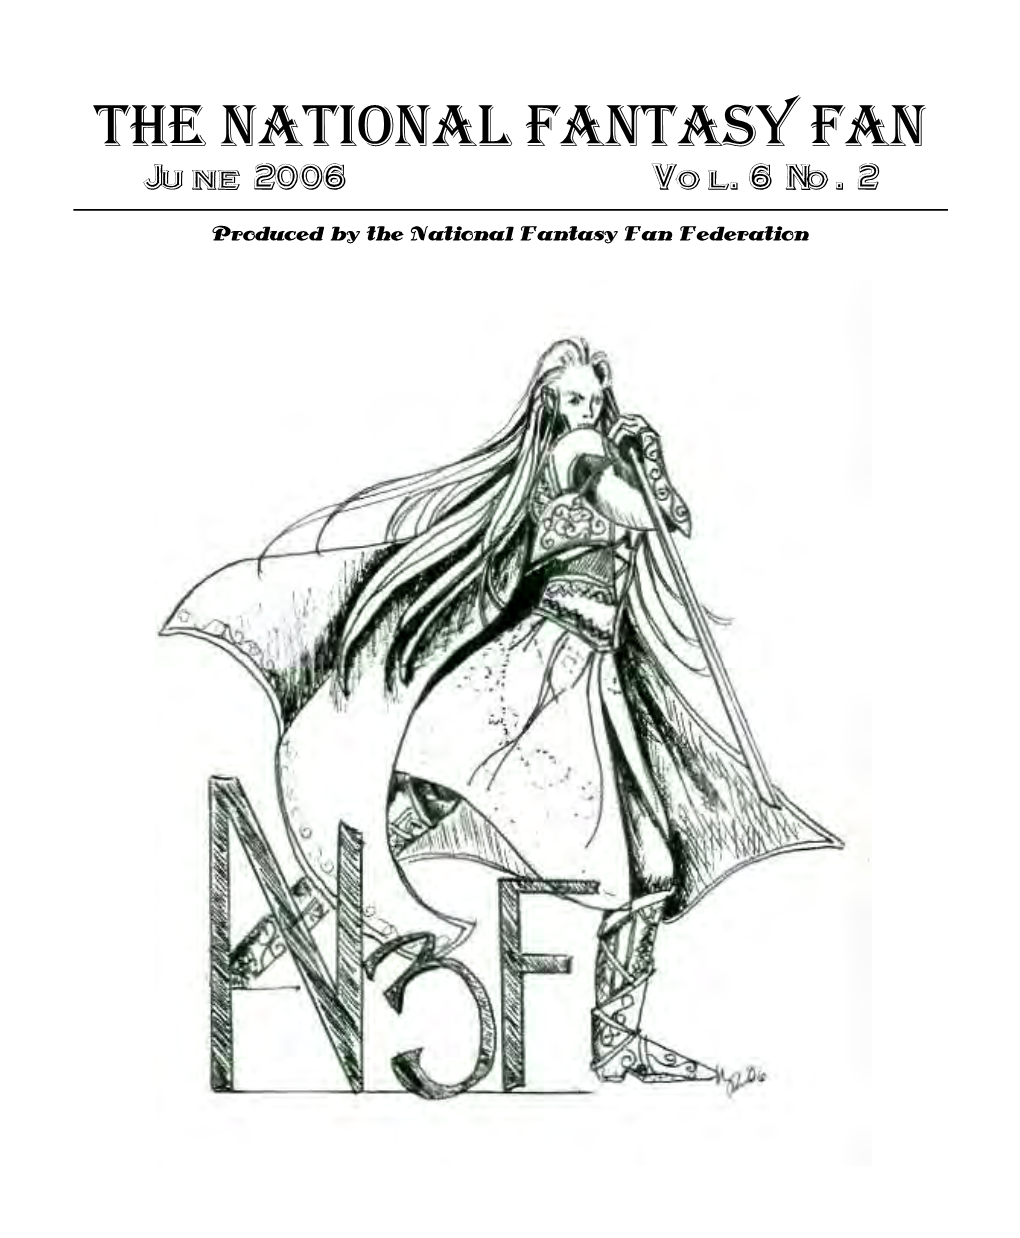 The National Fantasy Fan